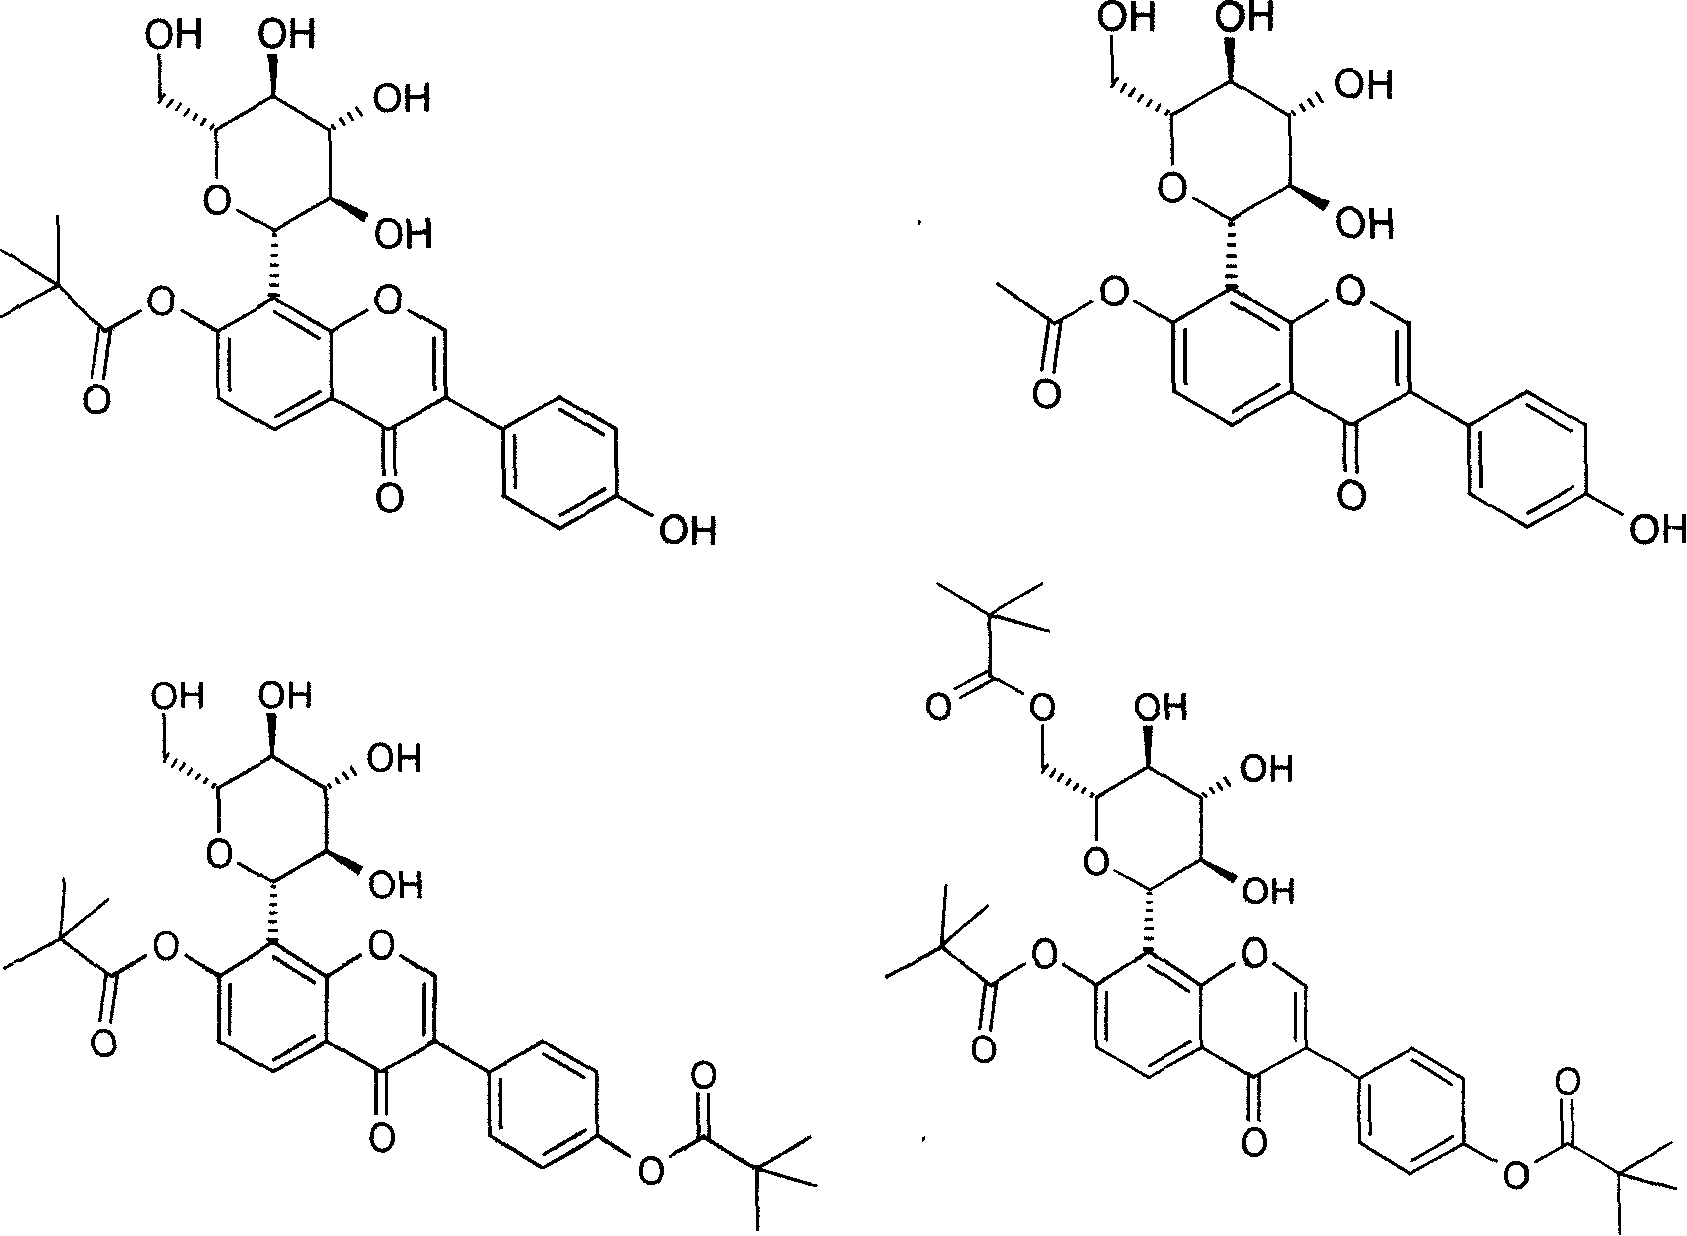 Puerarin derivative and its medicinal use